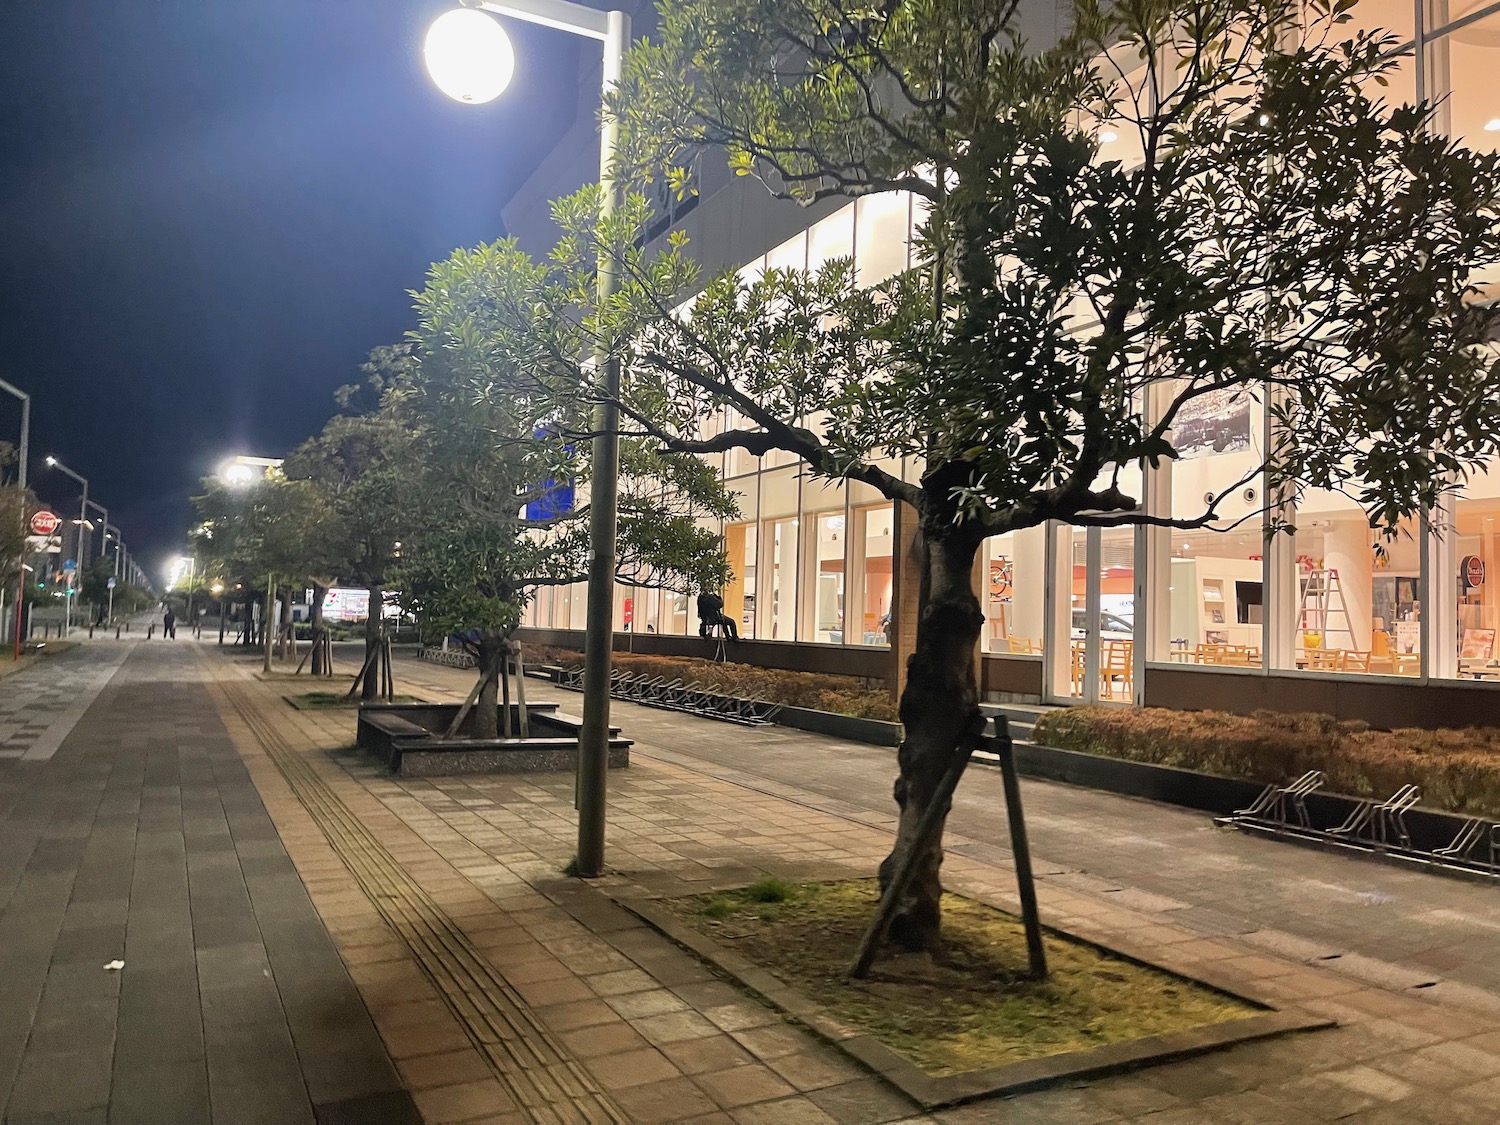 a tree lined sidewalk with a street light